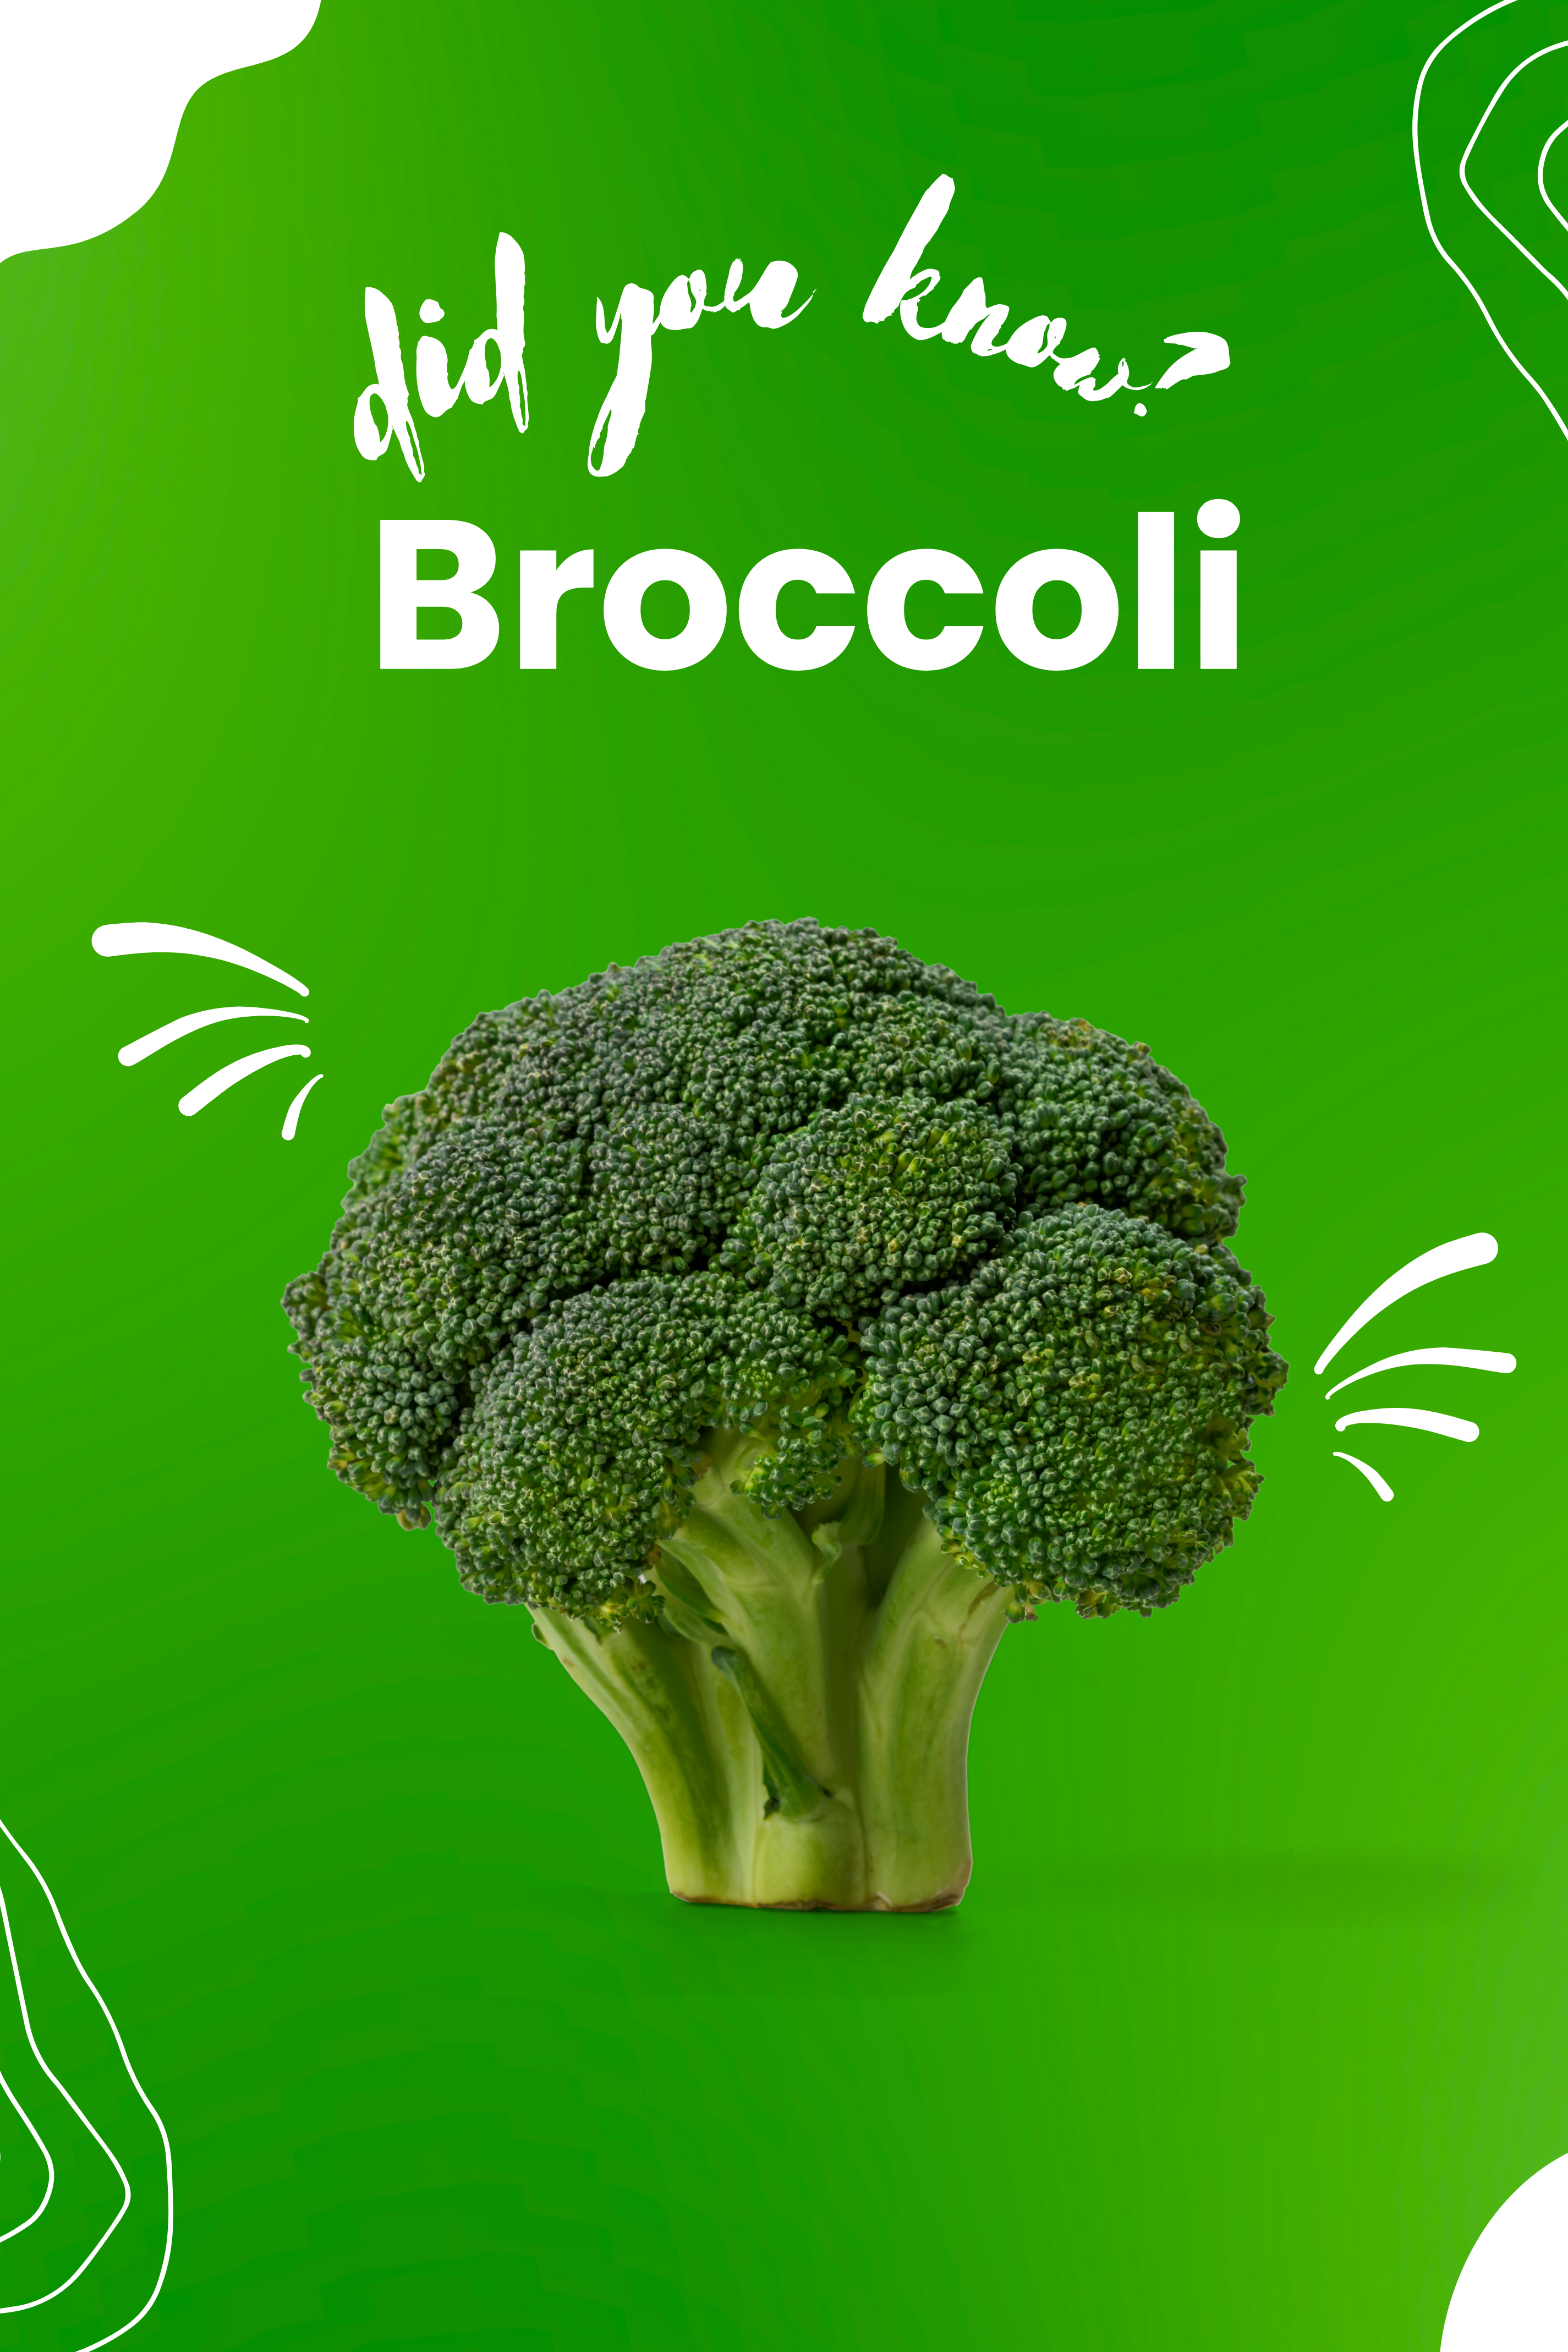 BROCCOLI BENEFITS